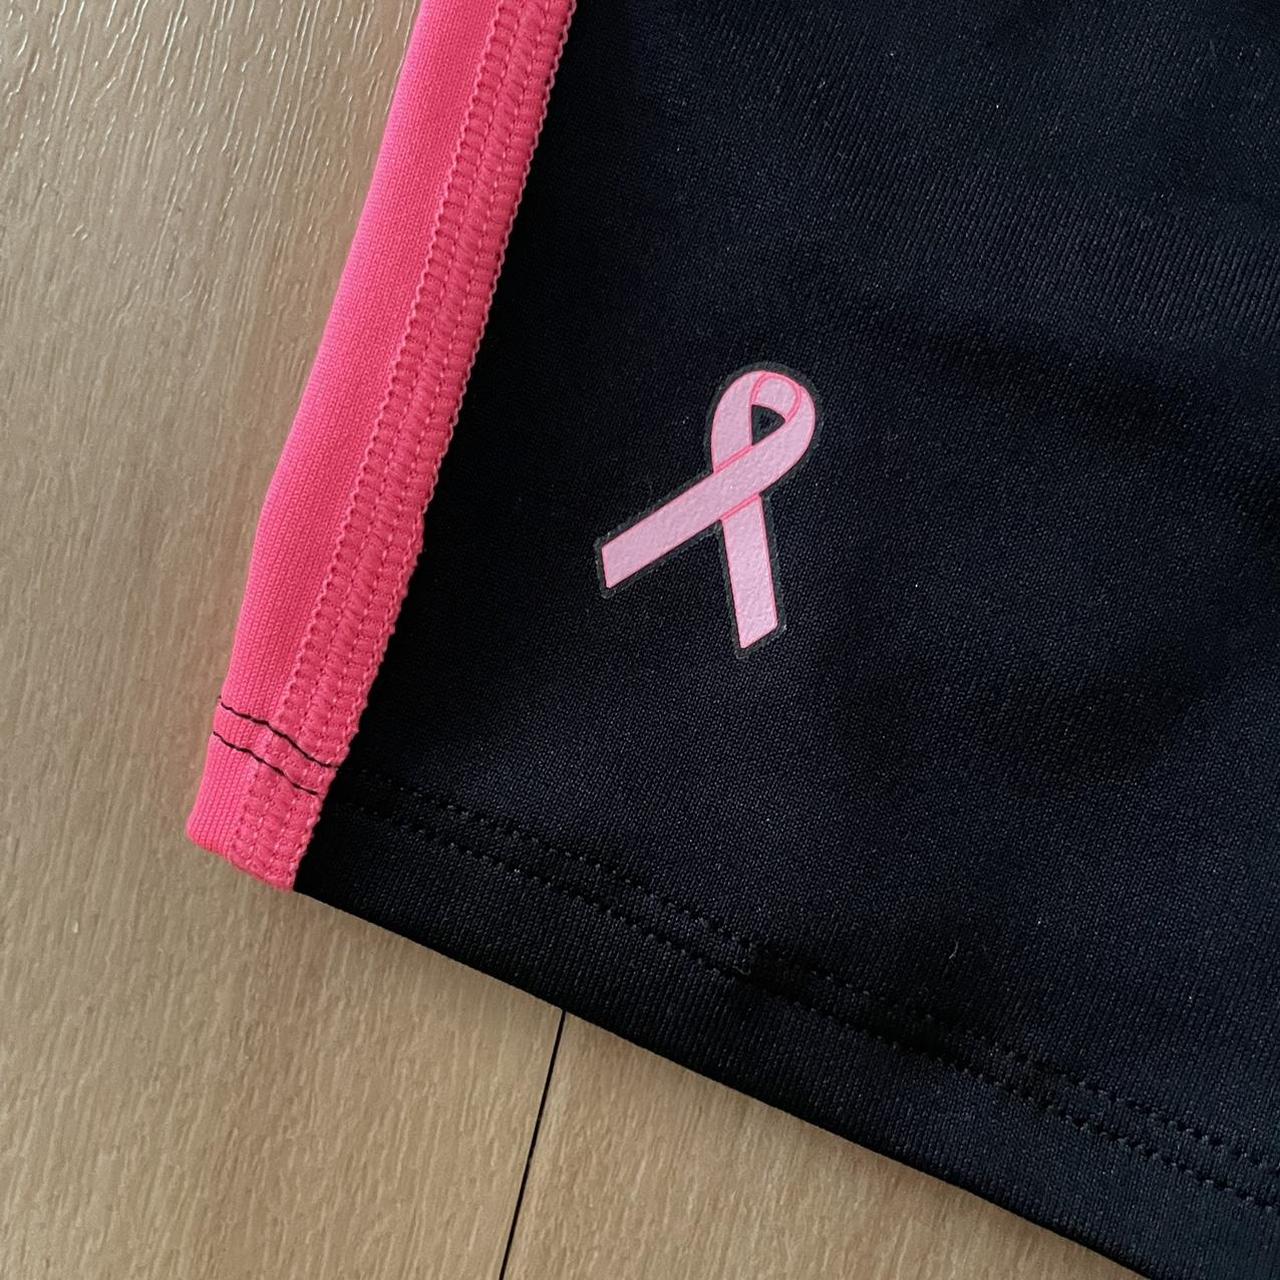 Under armour breast cancer awareness Capri leggings - Depop